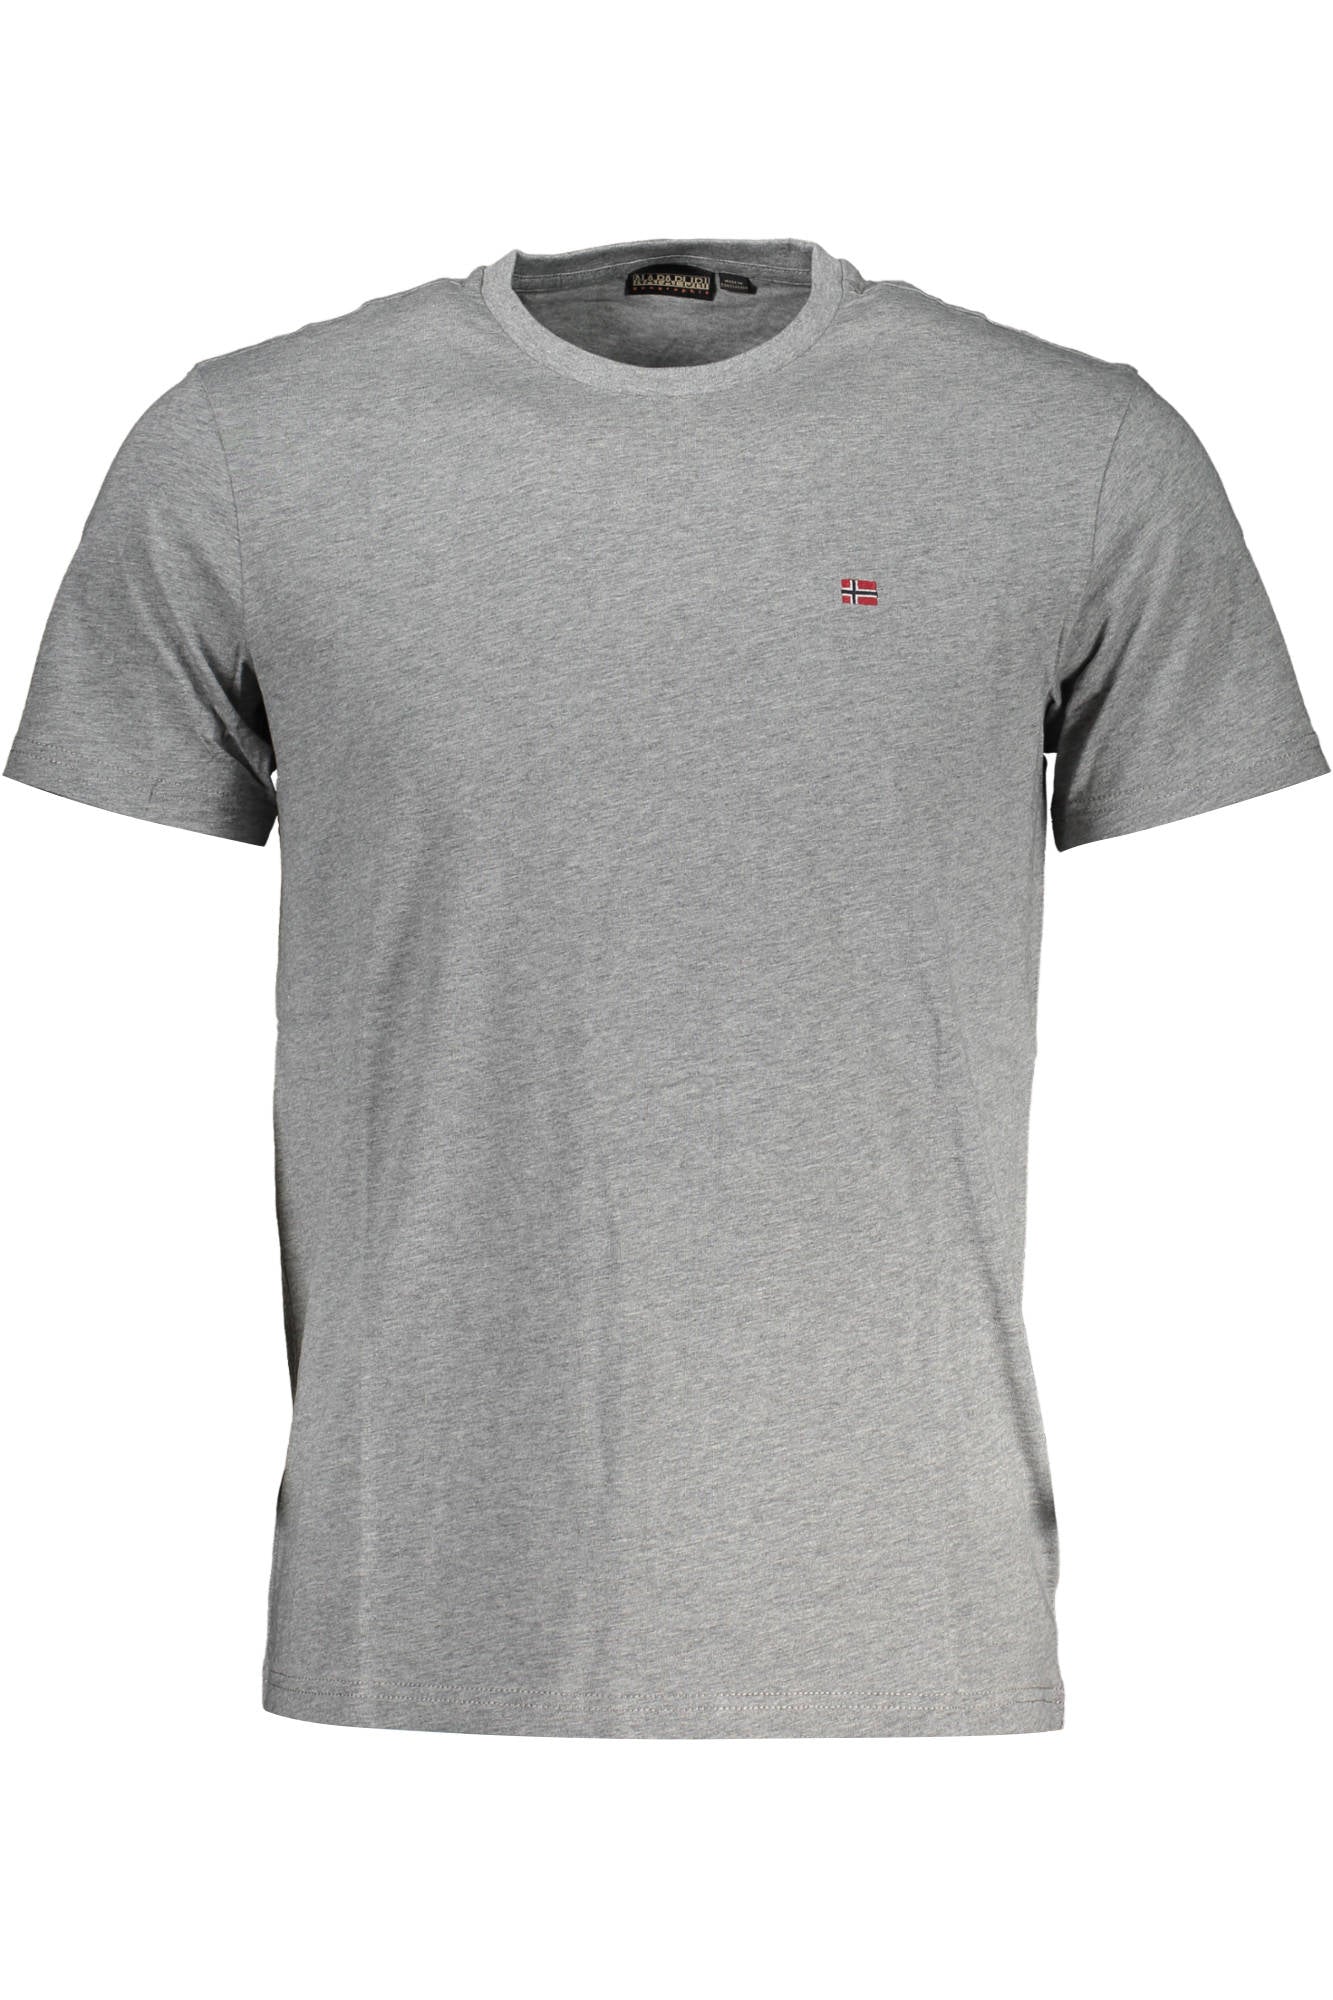 Napapijri Gray Cotton T-Shirt - Fizigo